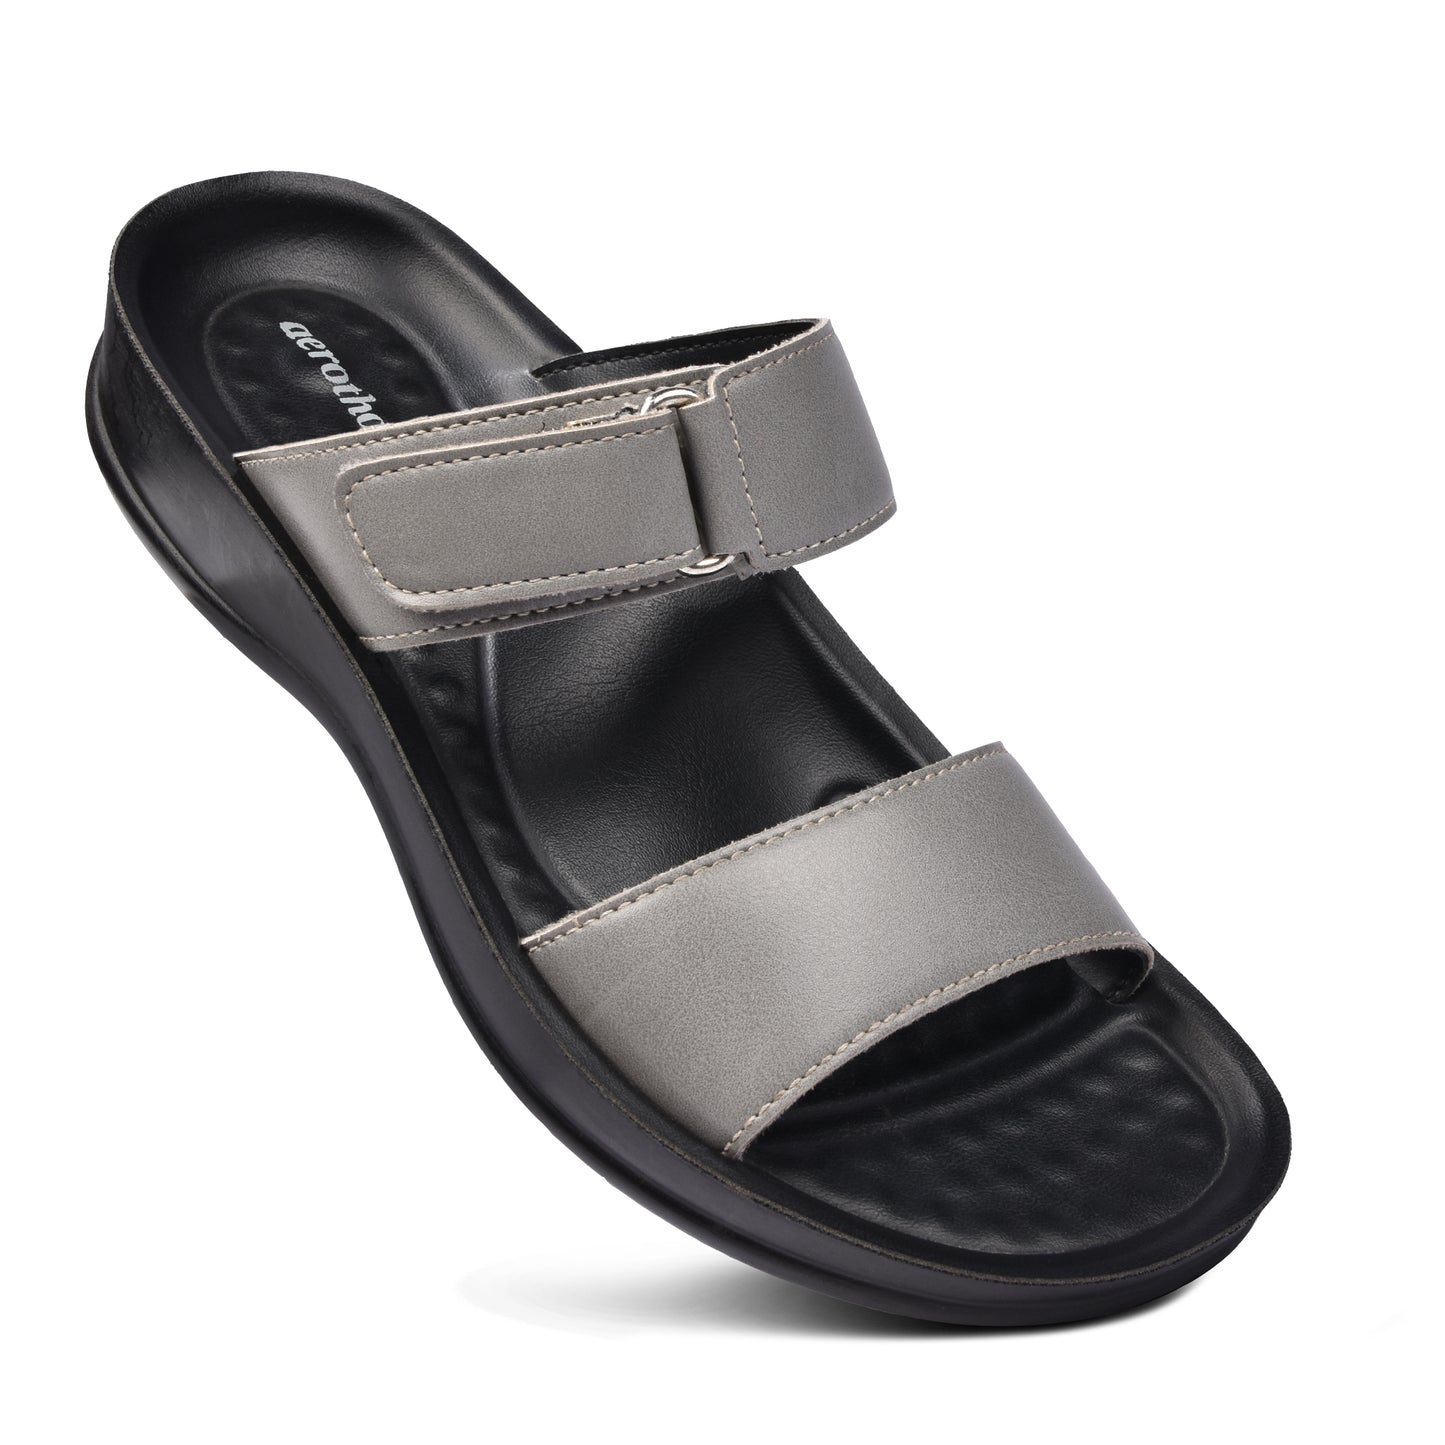 Aerothotic Rustic Women's Velcro Strap Slide Sandals